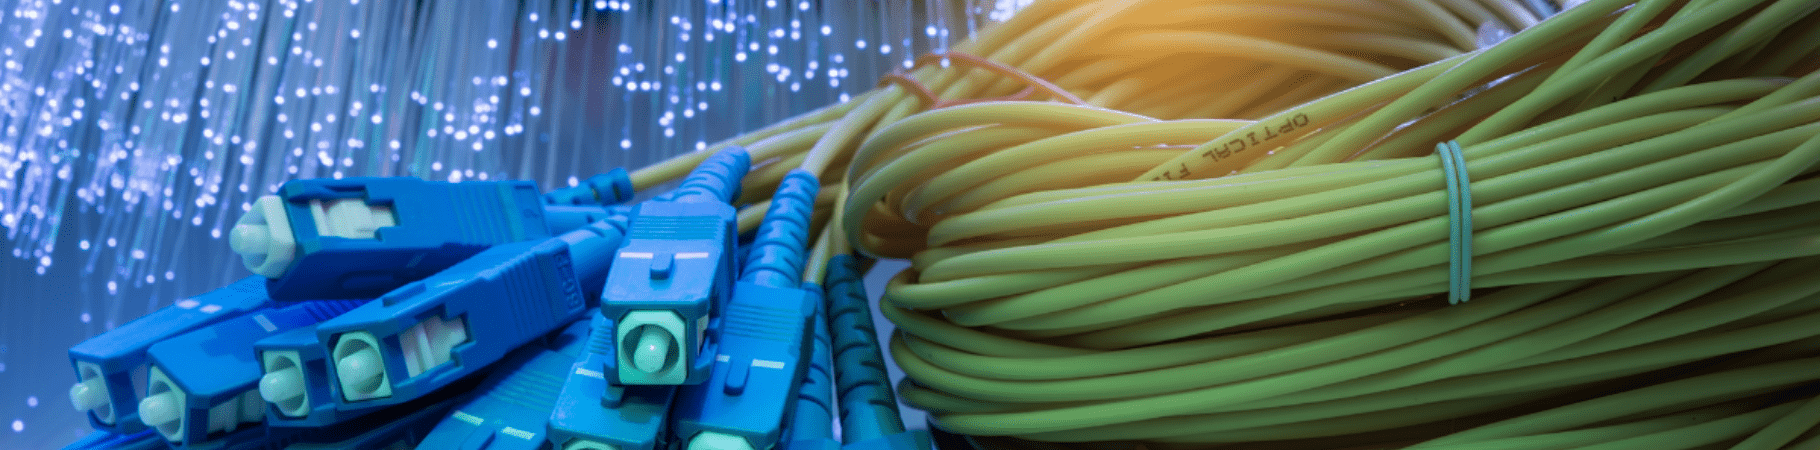 An assortment of various fiber optic cables bundled together over a blue background